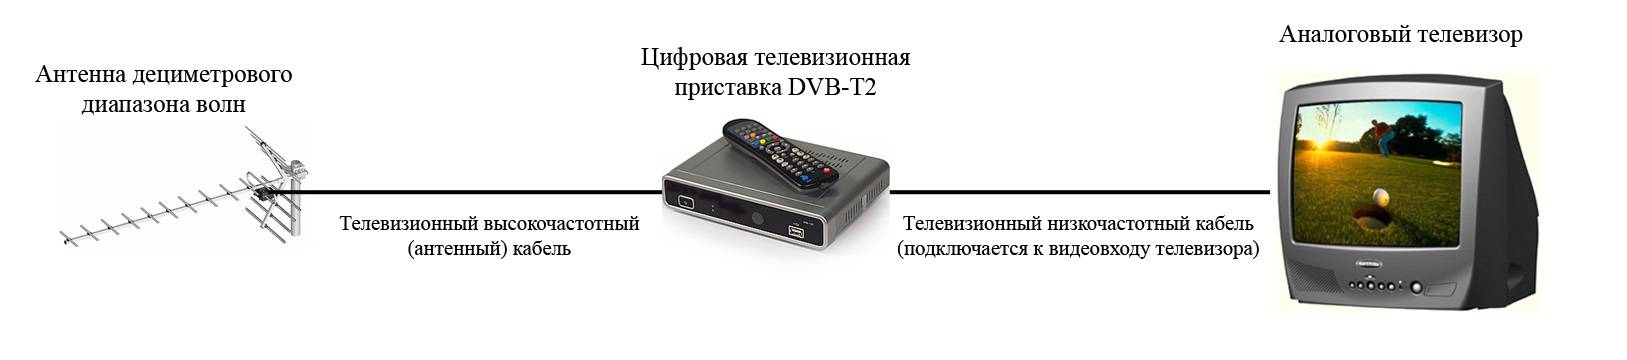 Подключение 20 каналов. ТВ-приставка для цифрового телевидения DVB-t2 схема подключения. DVB-t2 приставка схема подключения. Подключить 2 телевизора к цифровой приставке TVB-C. Как подключить старый телевизор к приставке т2.